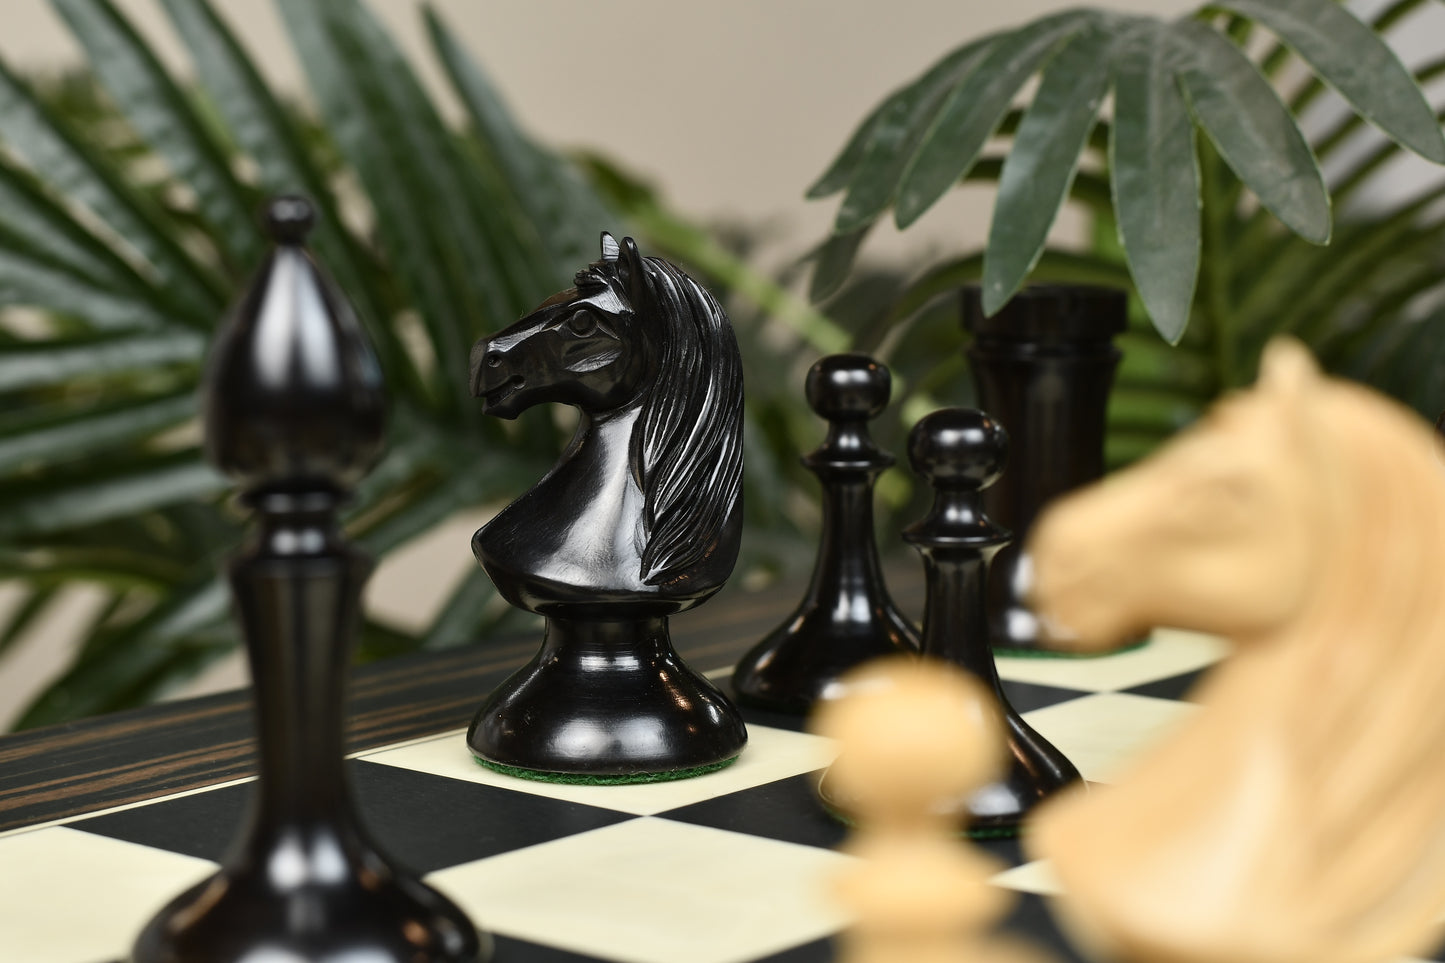 Reproduced 1910 Circa Lasker–Schlechter World Championship Chessmen in Genuine Ebony Wood & Boxwood - 4.5" King